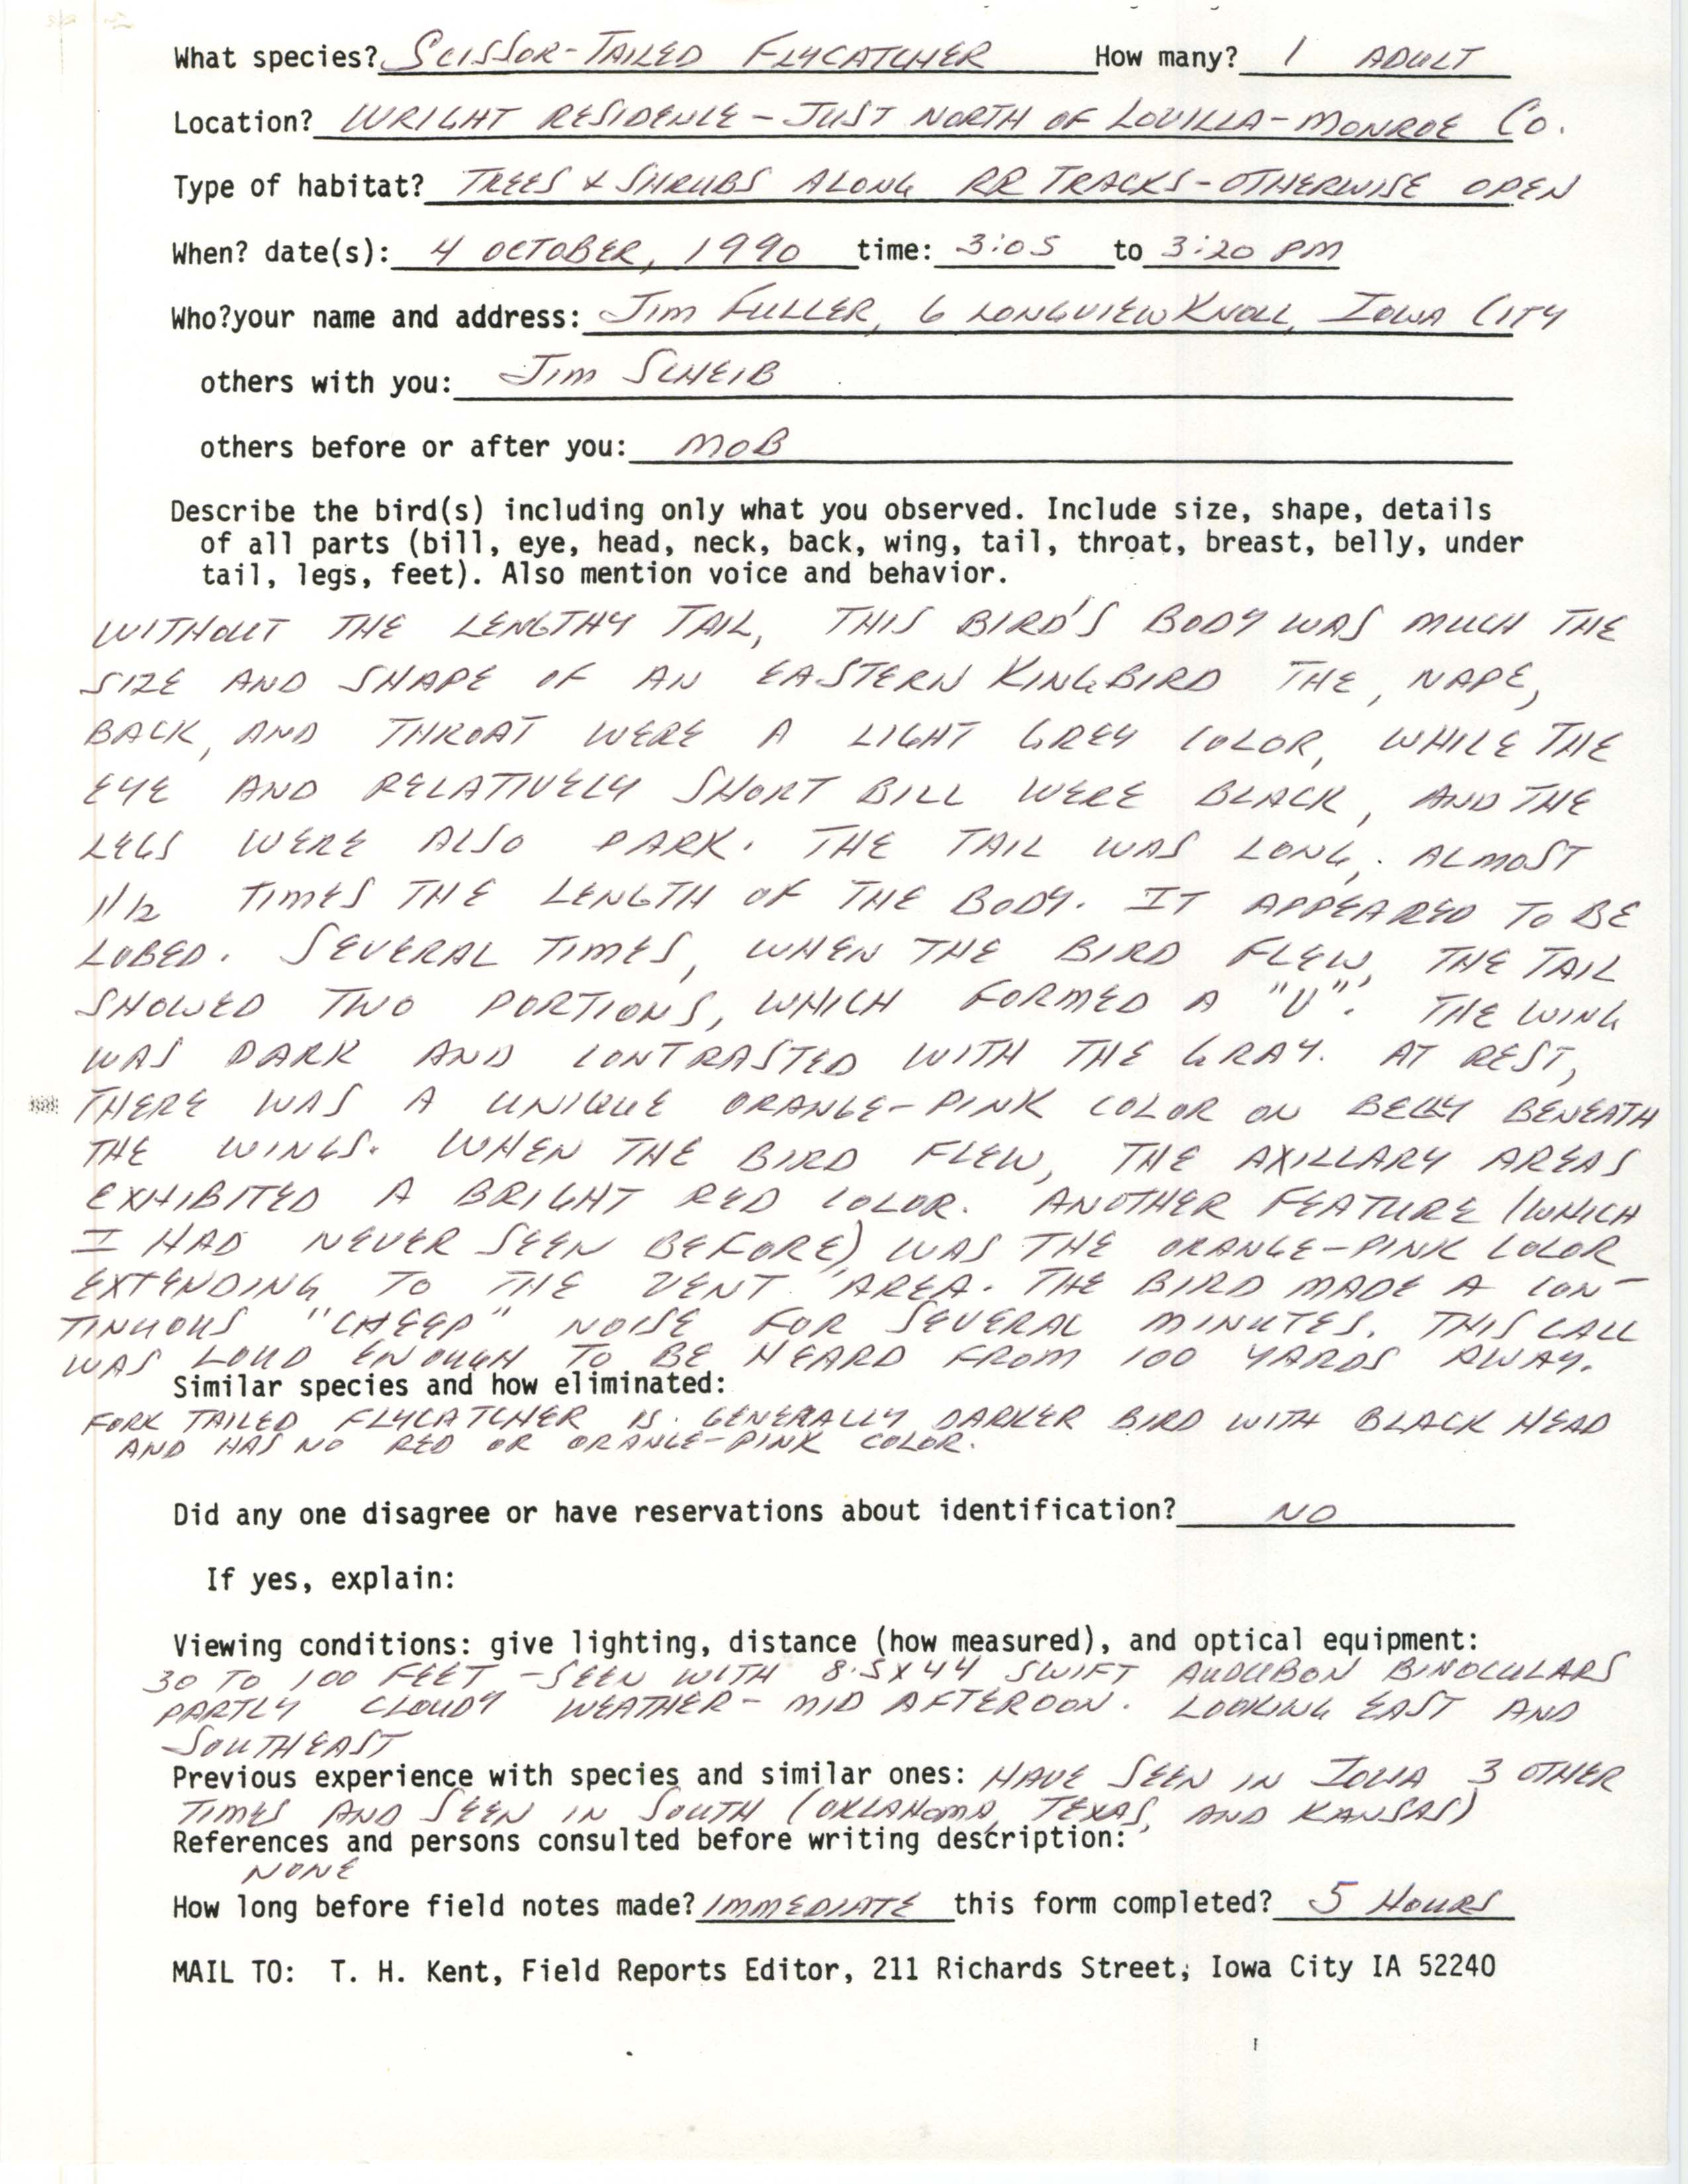 Rare bird documentation form for Scissor-tailed Flycatcher north of Lovilia, 1990